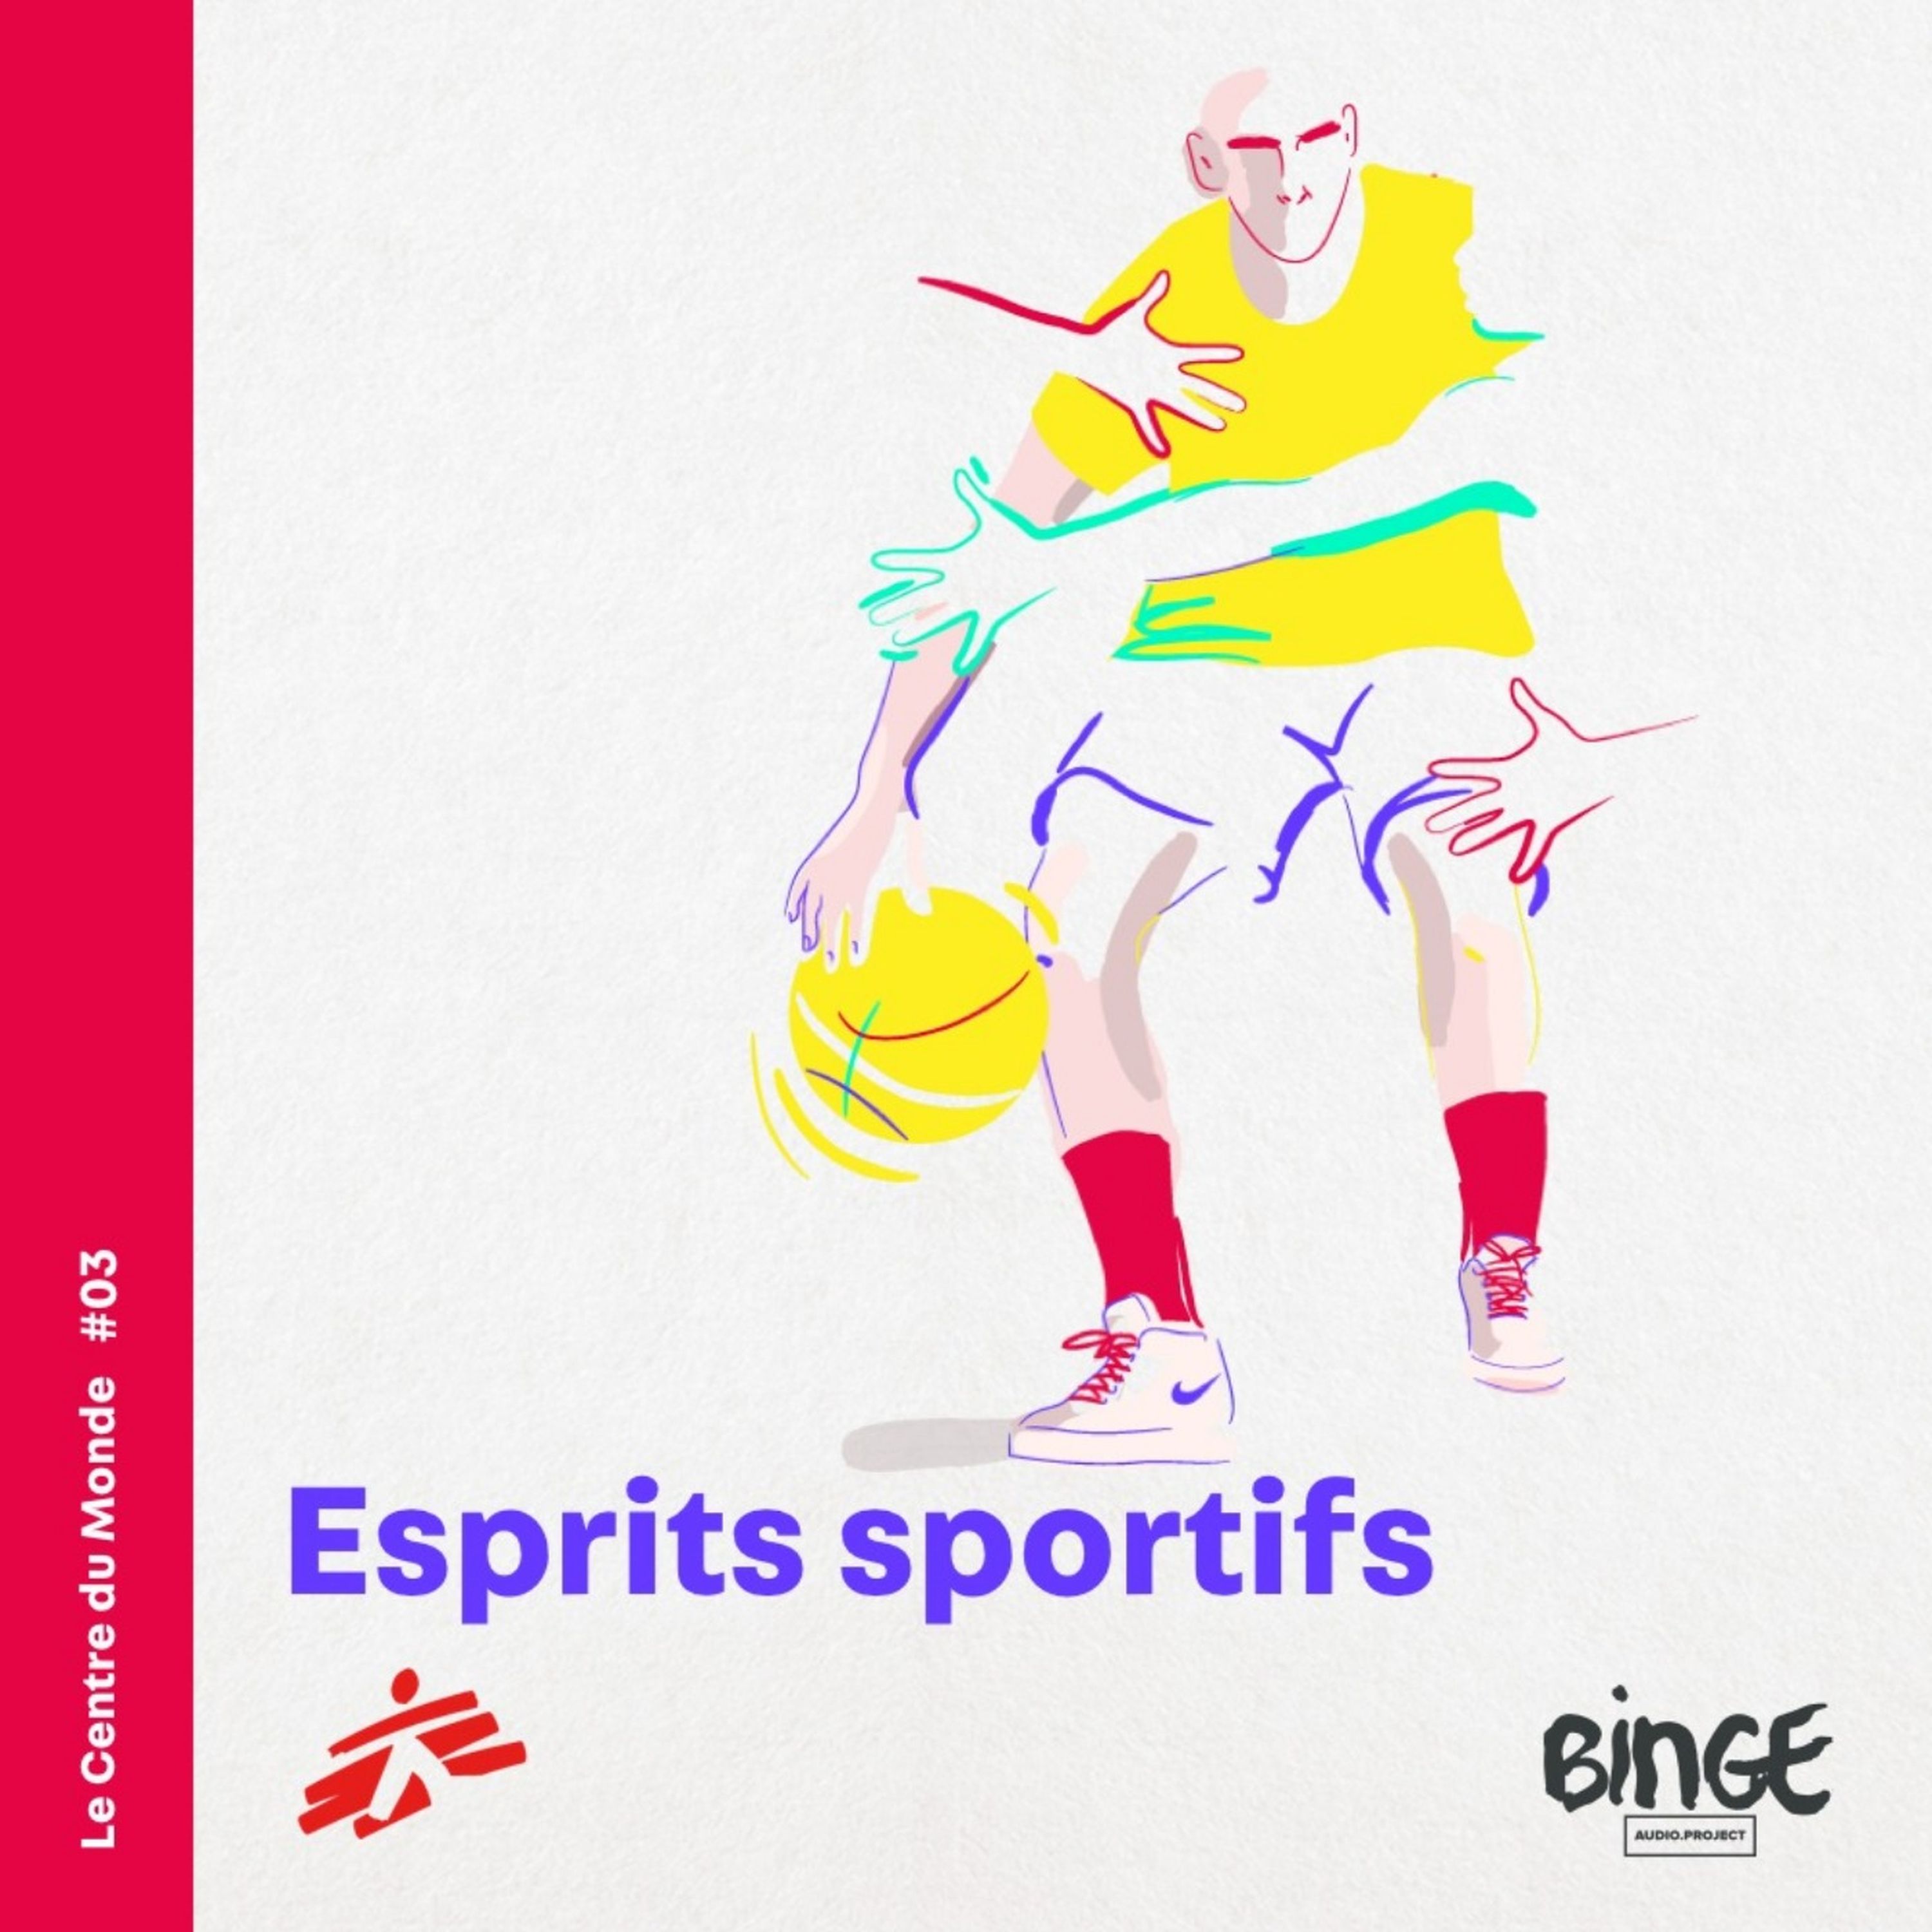 Episode 3 - Esprits sportifs